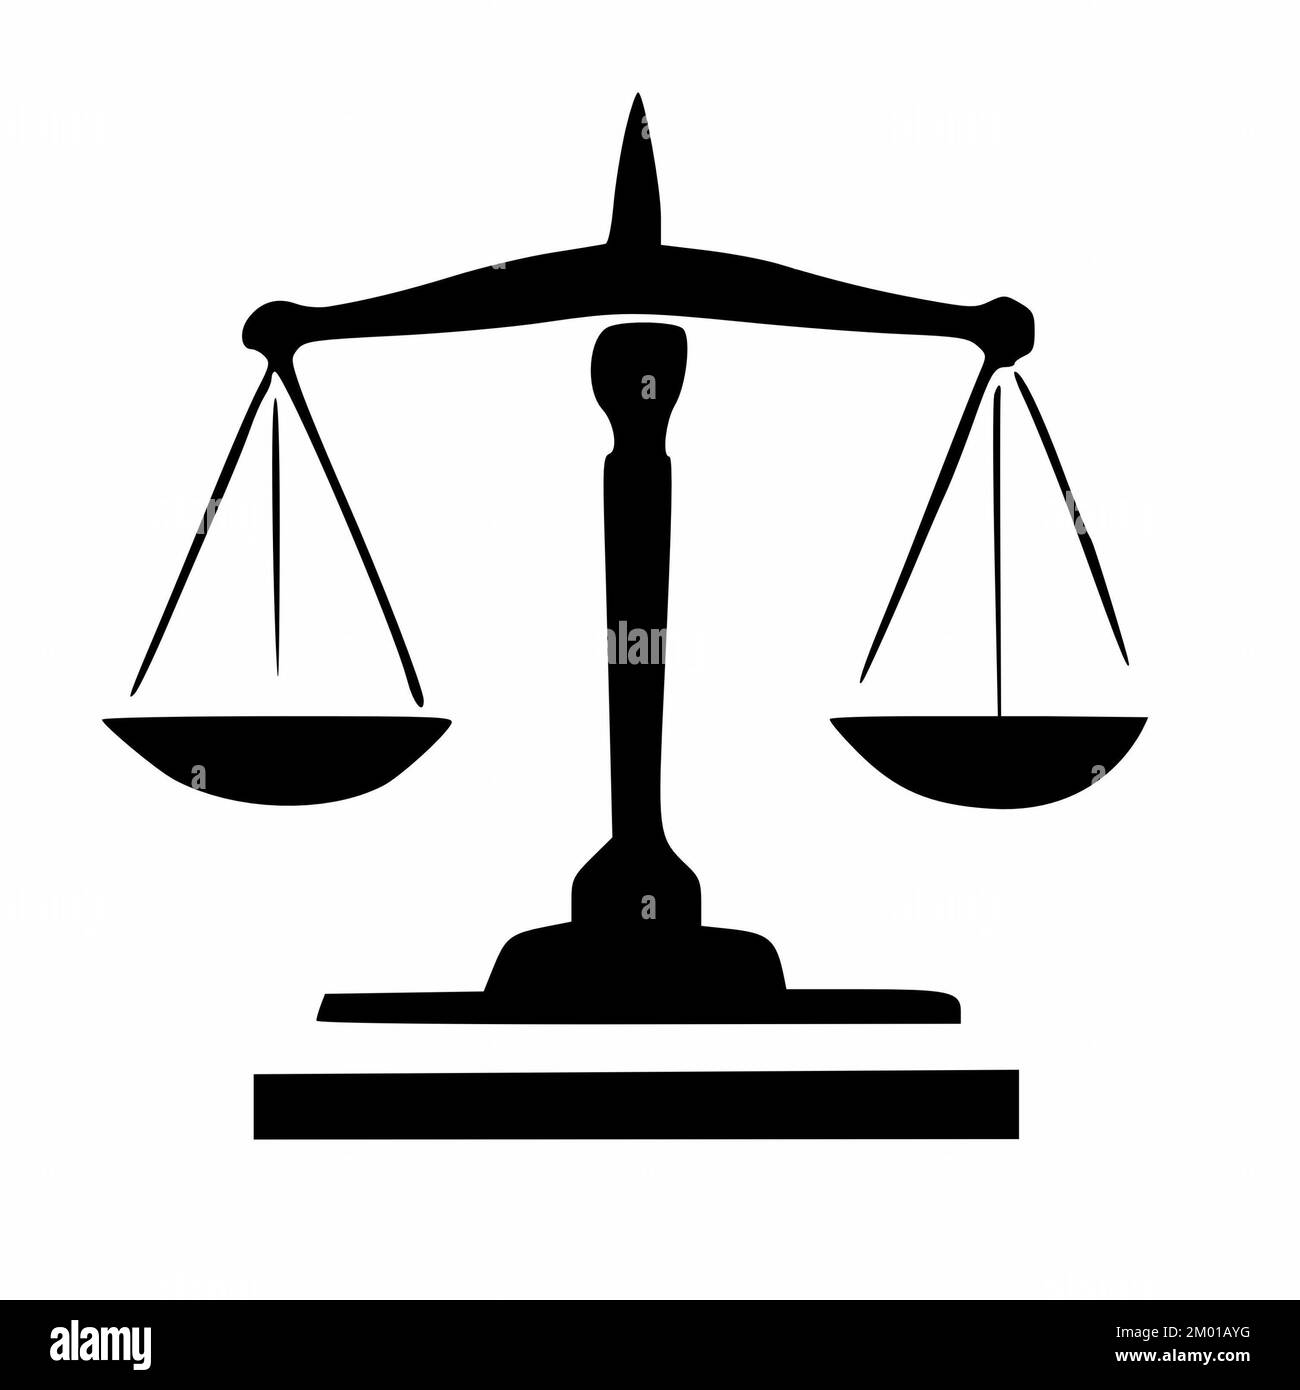 Logo del abogado fotografías e imágenes de alta resolución - Alamy